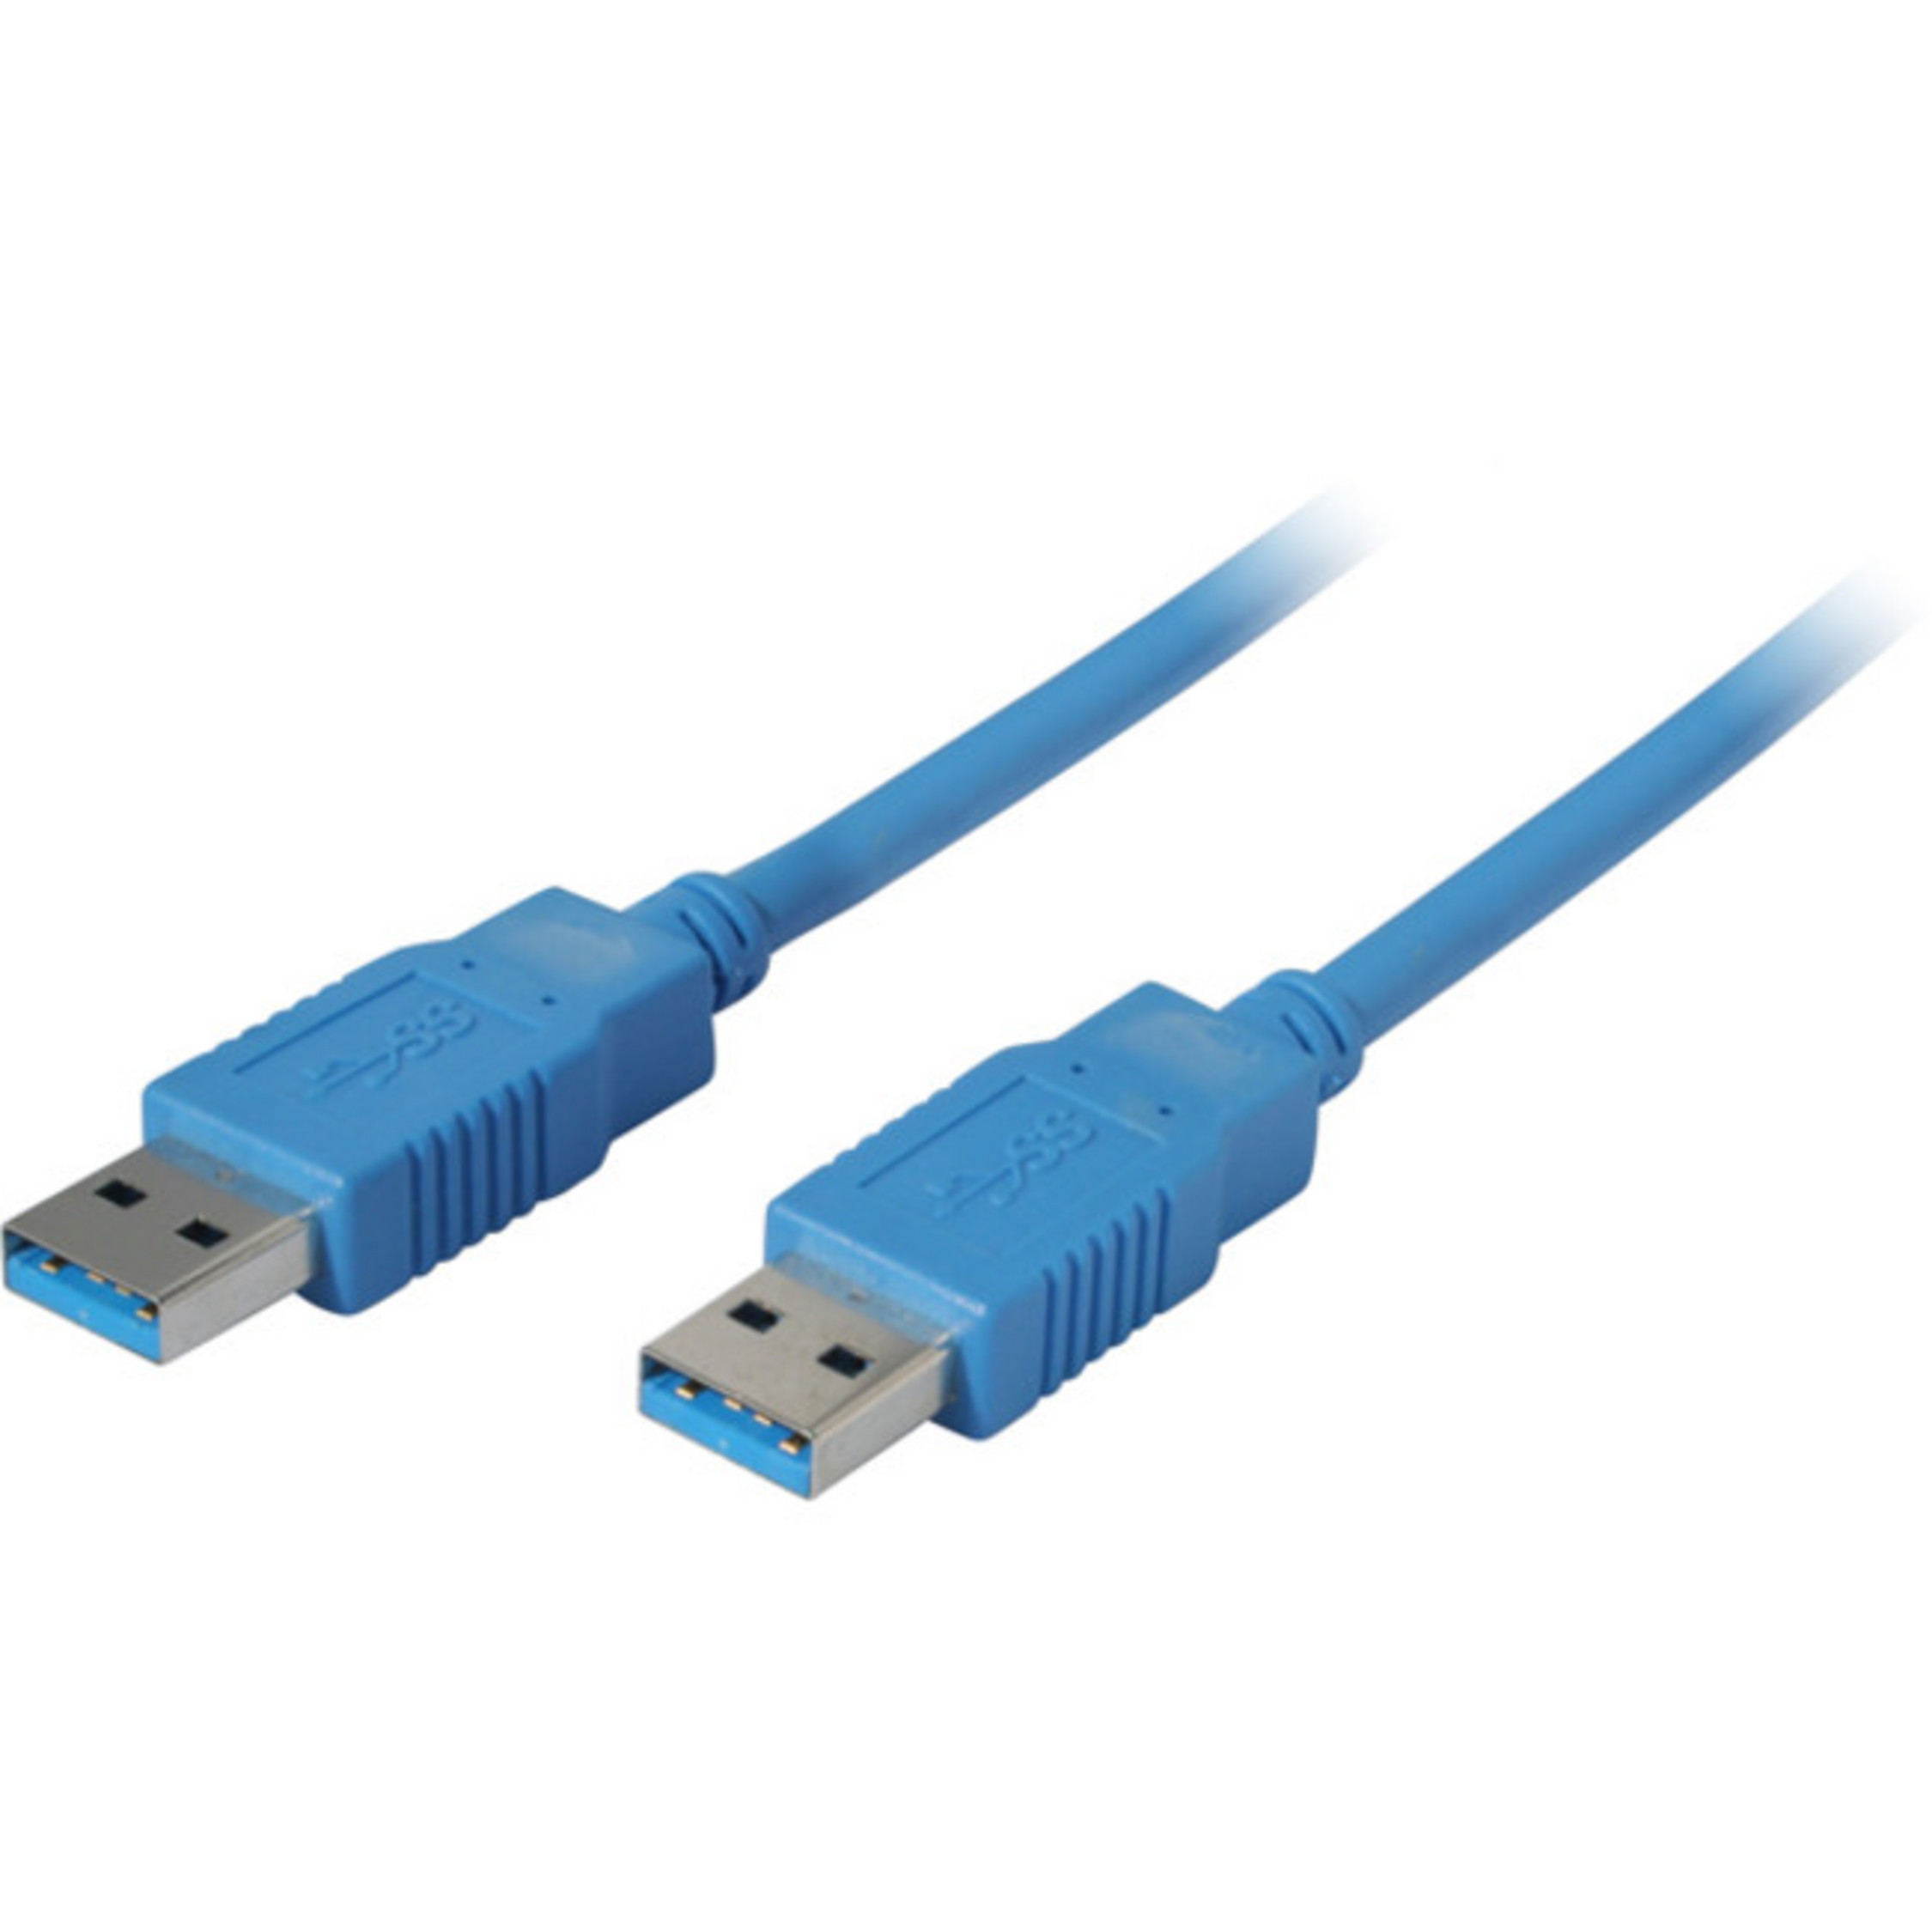 S/CONN MAXIMUM CONNECTIVITY USB Kabel 3.0 / Stecker Kabel 5m A blau USB Stecker A USB